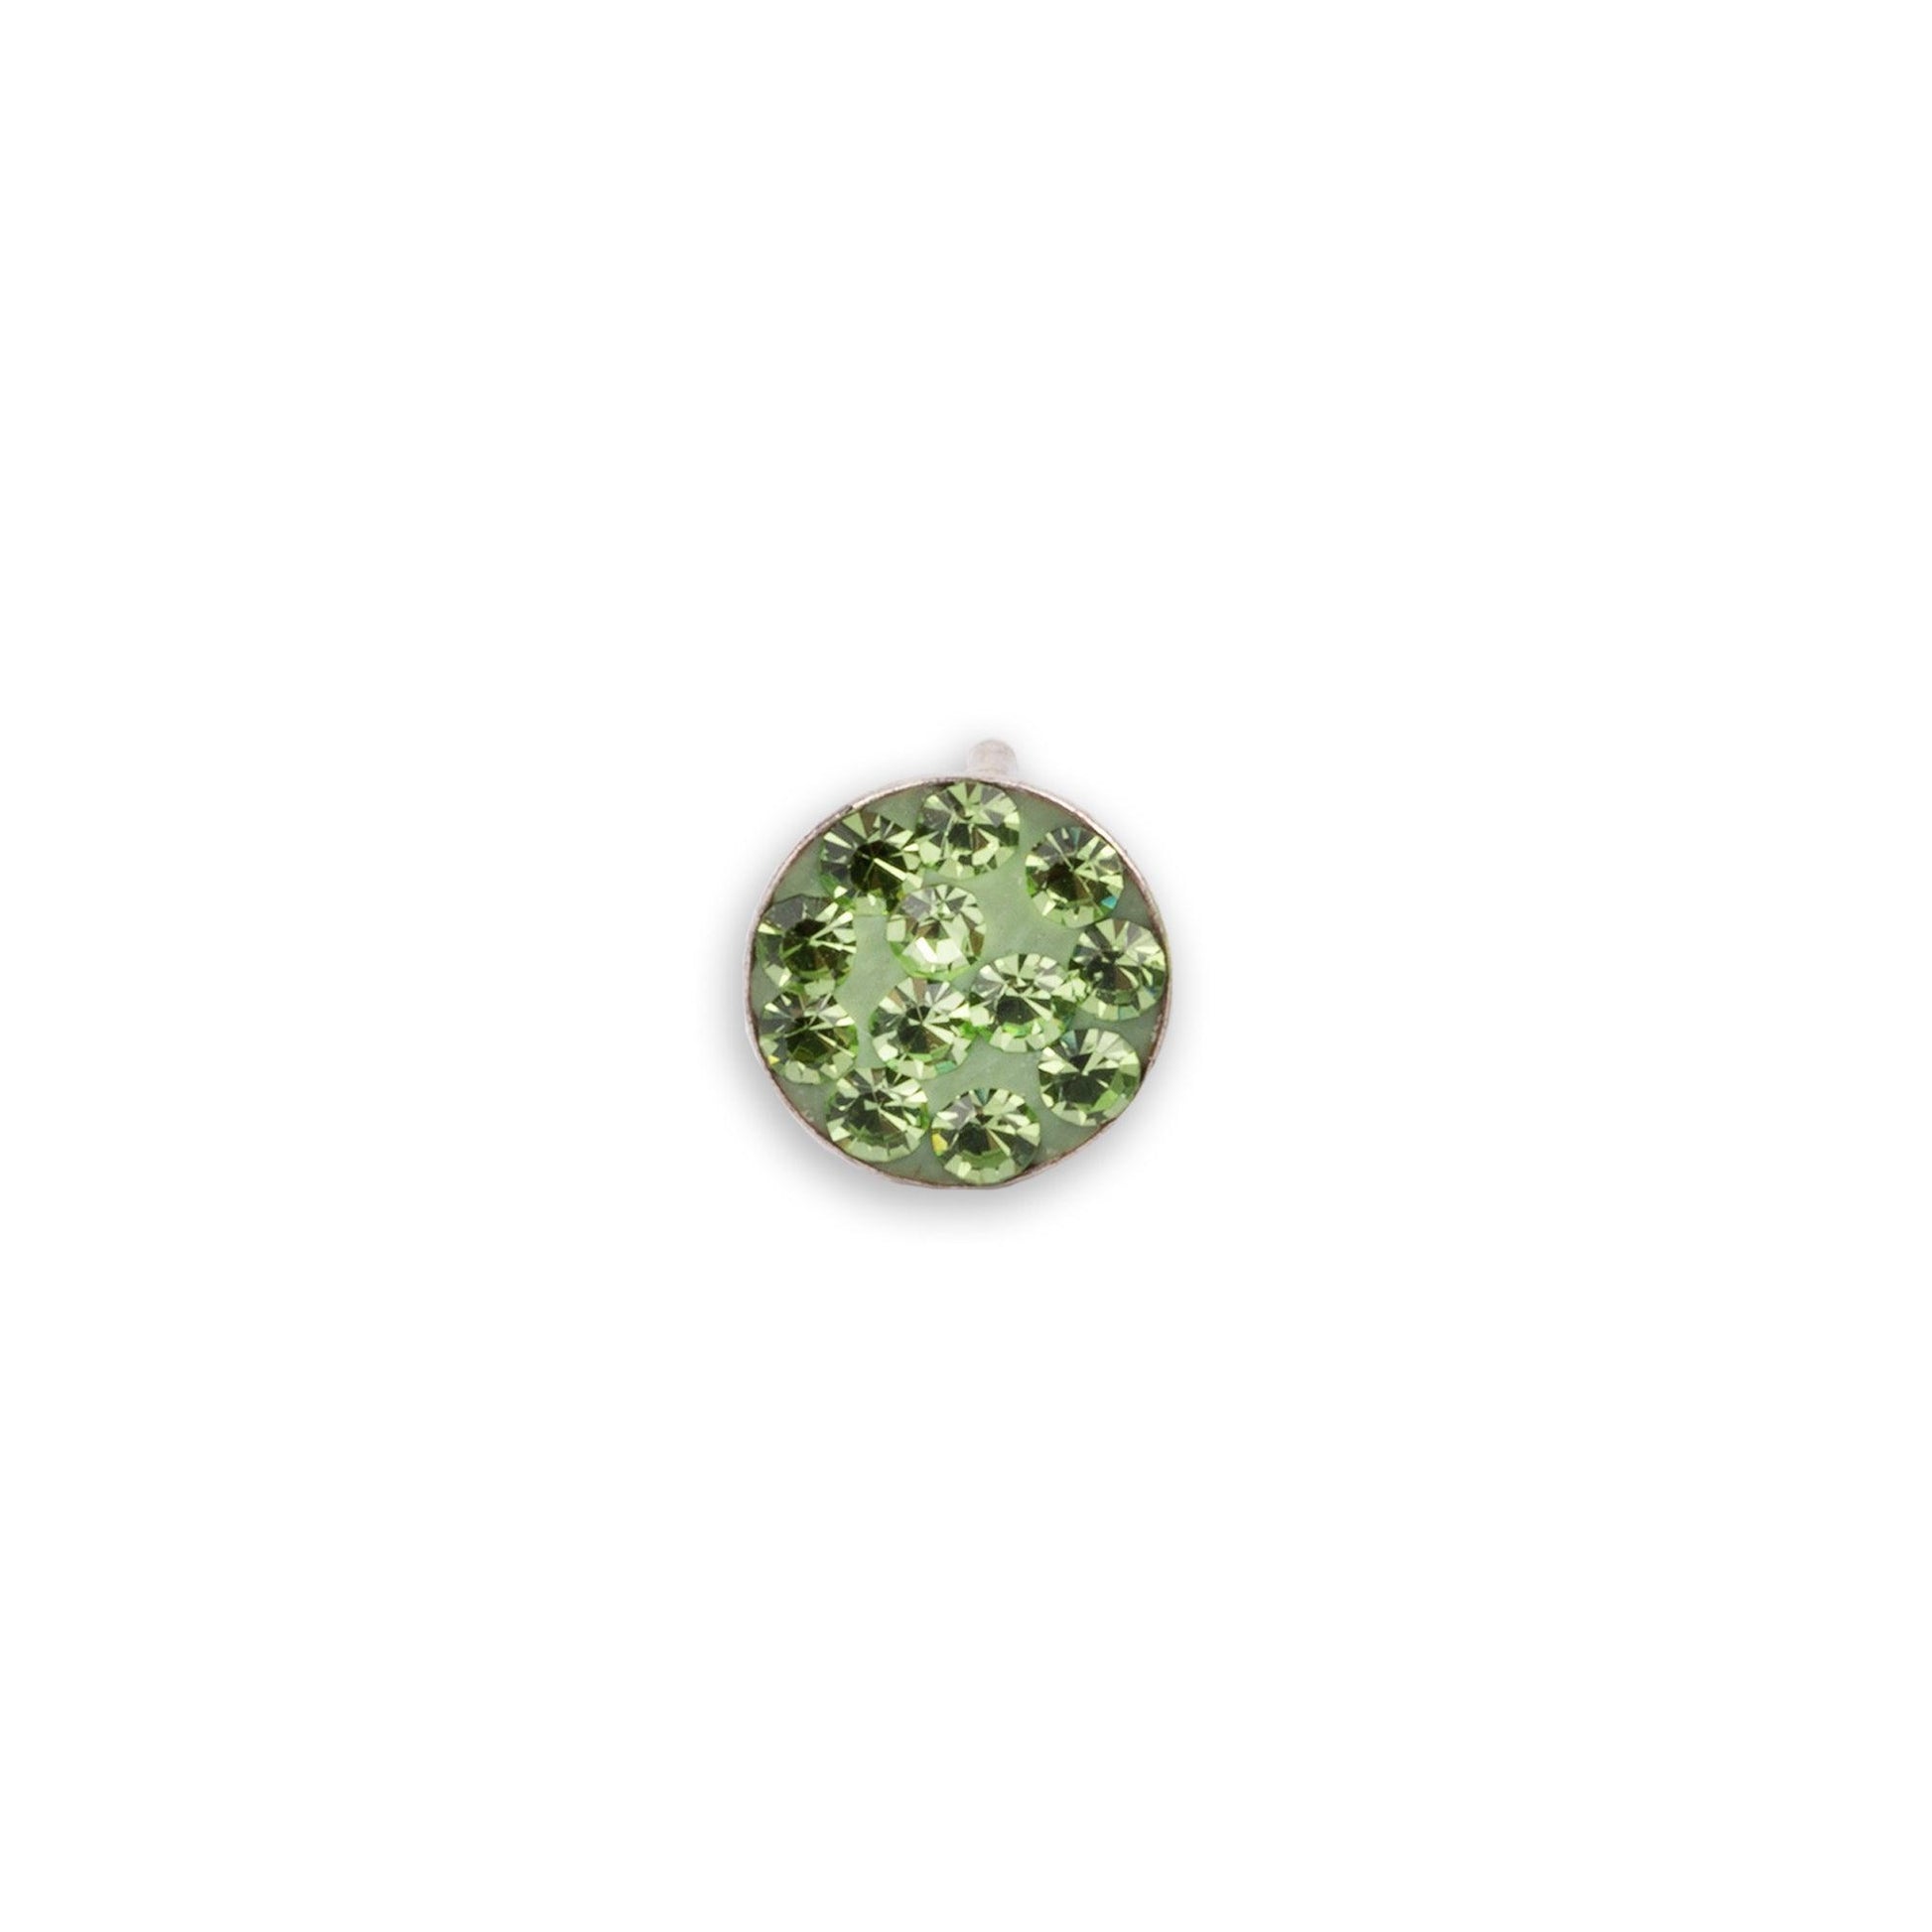 Sterling Silver Green Austrian Crystal Stud Earrings with Push Back BP9622 - Minar Jewellers